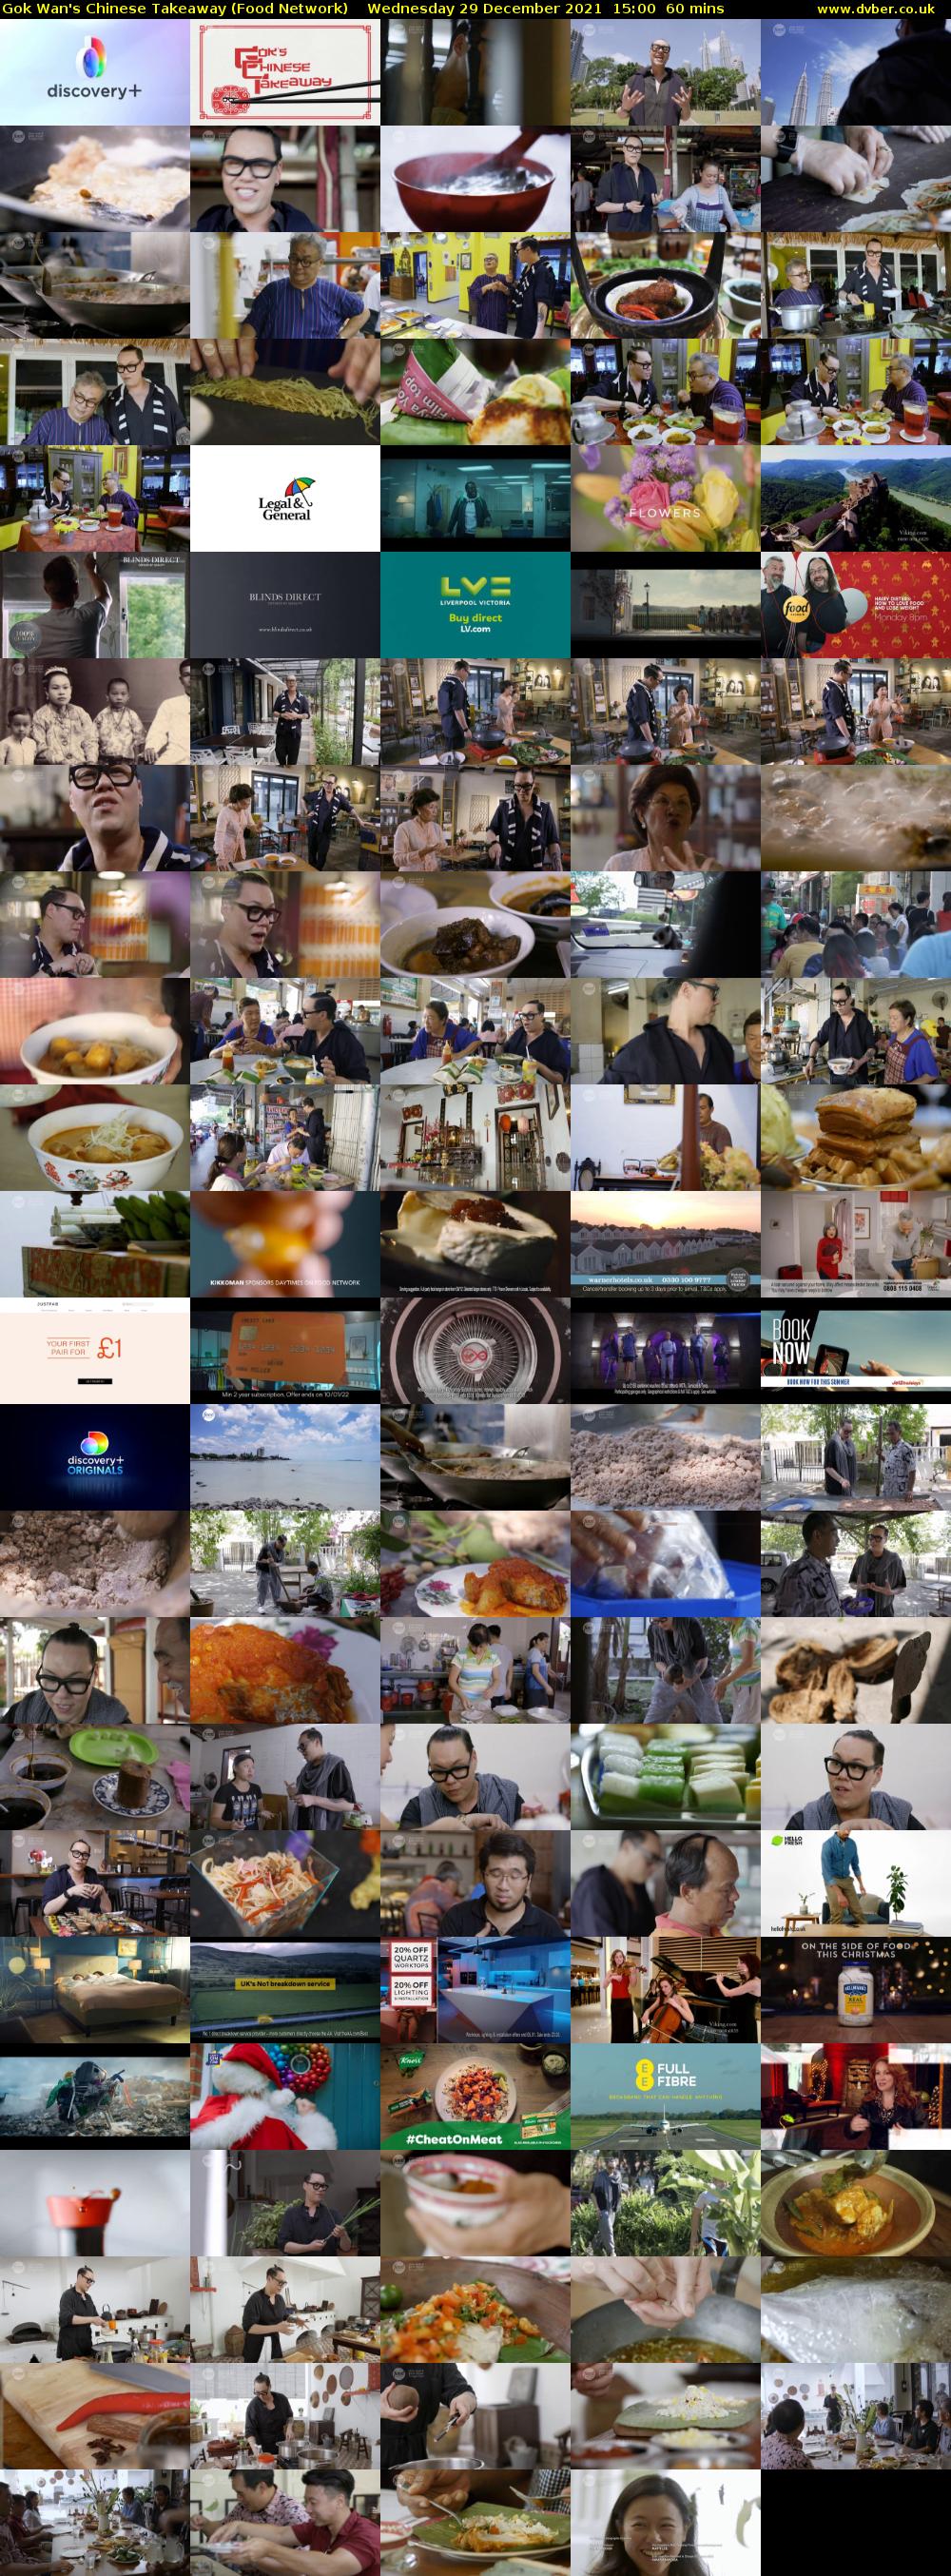 Gok Wan's Chinese Takeaway (Food Network) Wednesday 29 December 2021 15:00 - 16:00